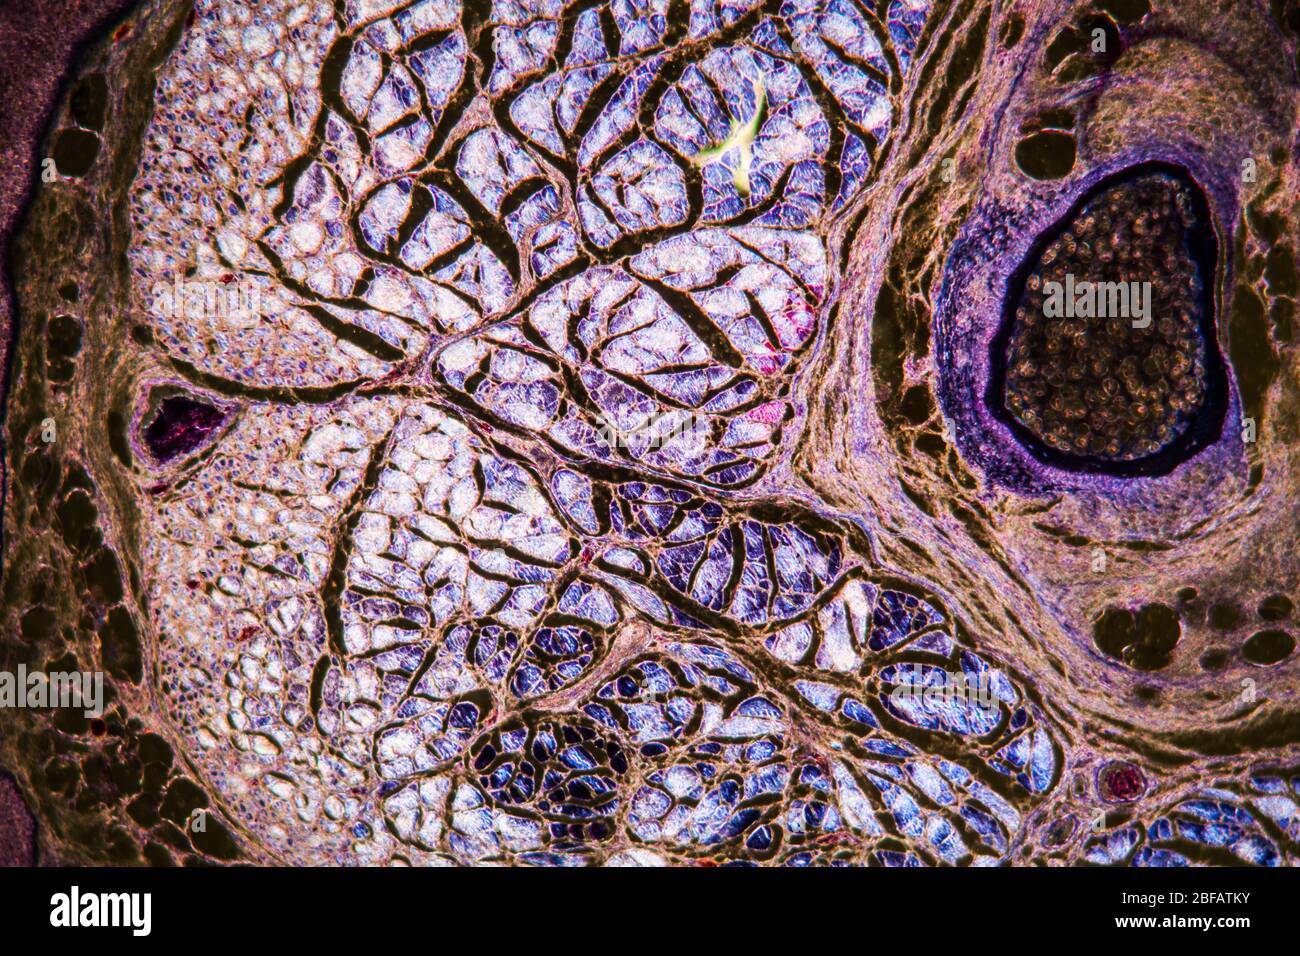 Brain cells in the dark field under the microscope 100x Stock Photo